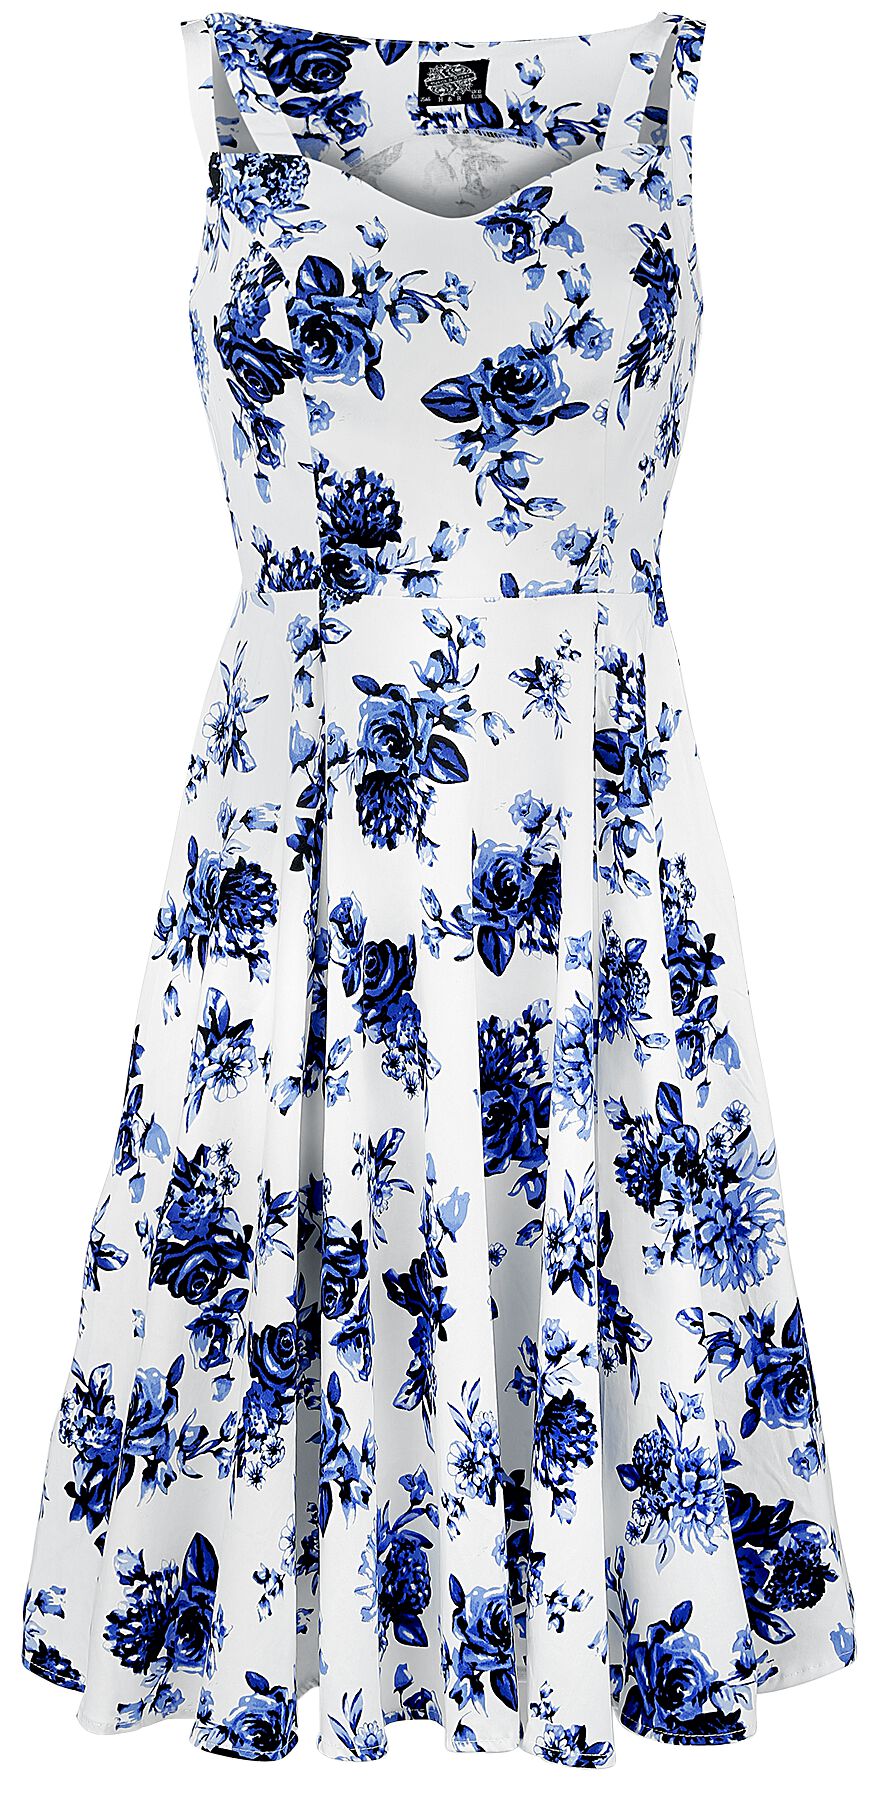 H&R London - Rockabilly Kleid knielang - Blue Rosaceae Swing Dress - S bis 3XL - für Damen - Größe 3XL - multicolor